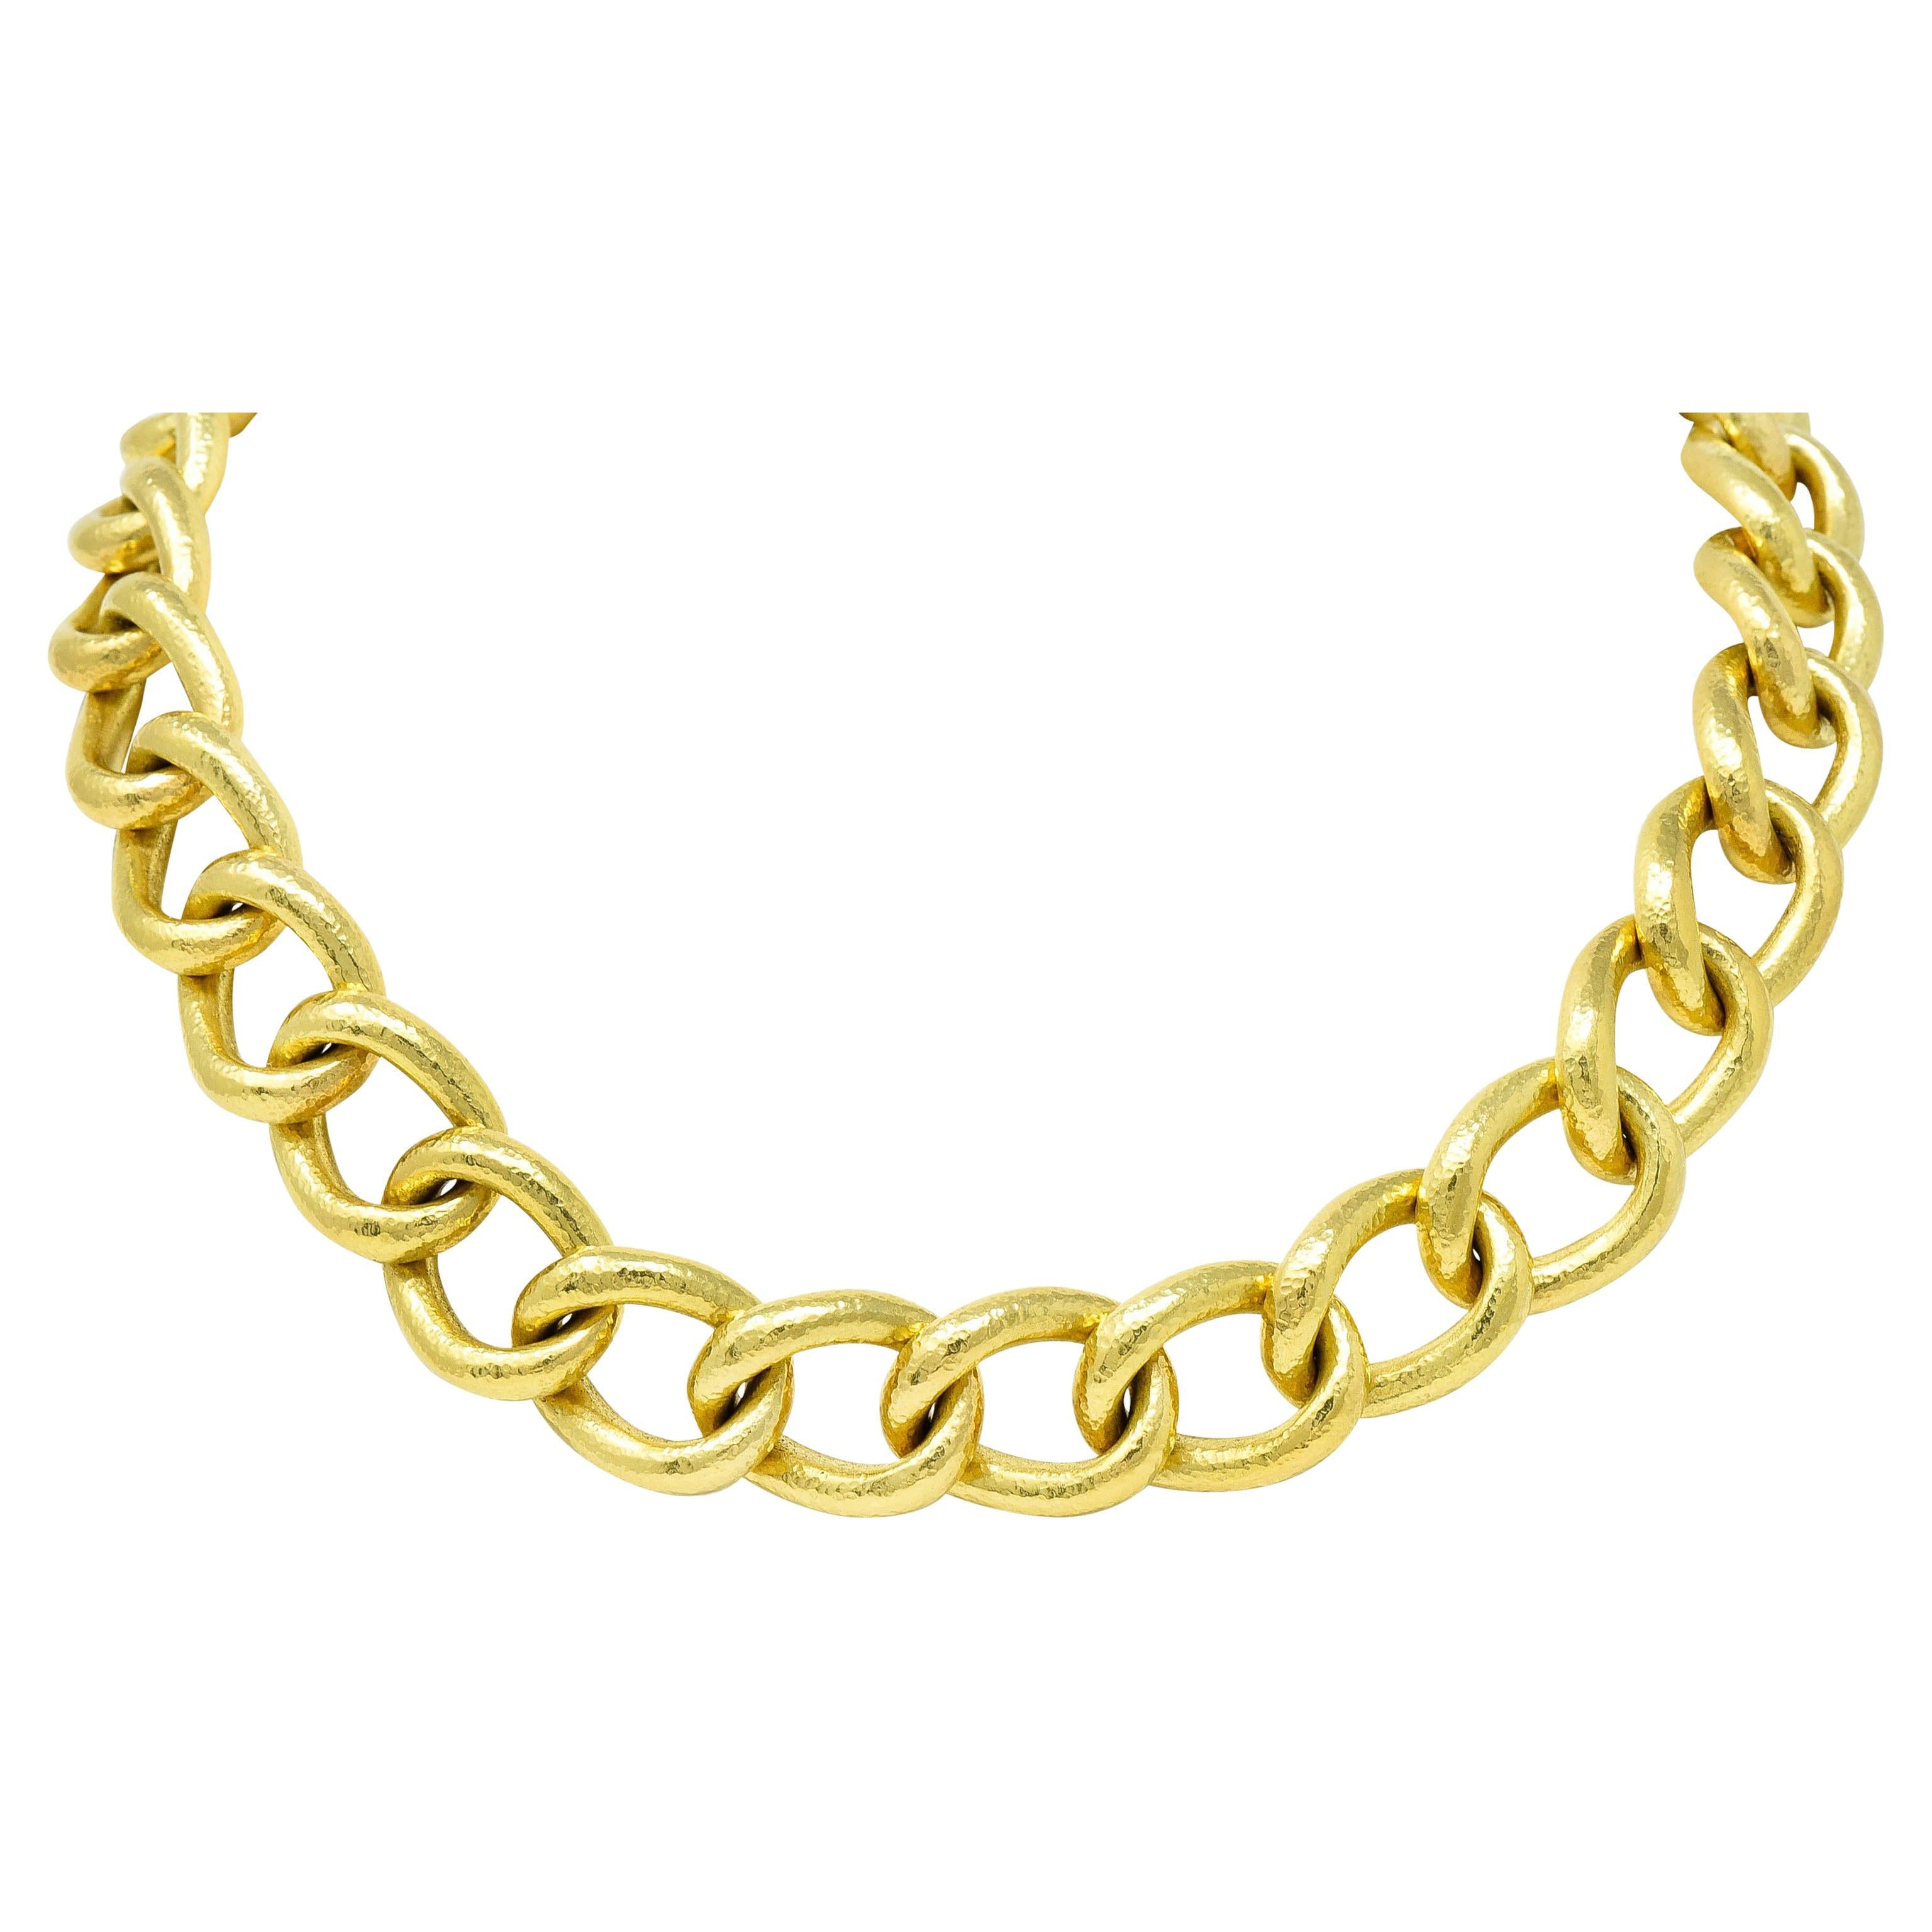 Elizabeth Locke Sapphire 18 Karat Gold Substantial Curb Link Chain Necklace